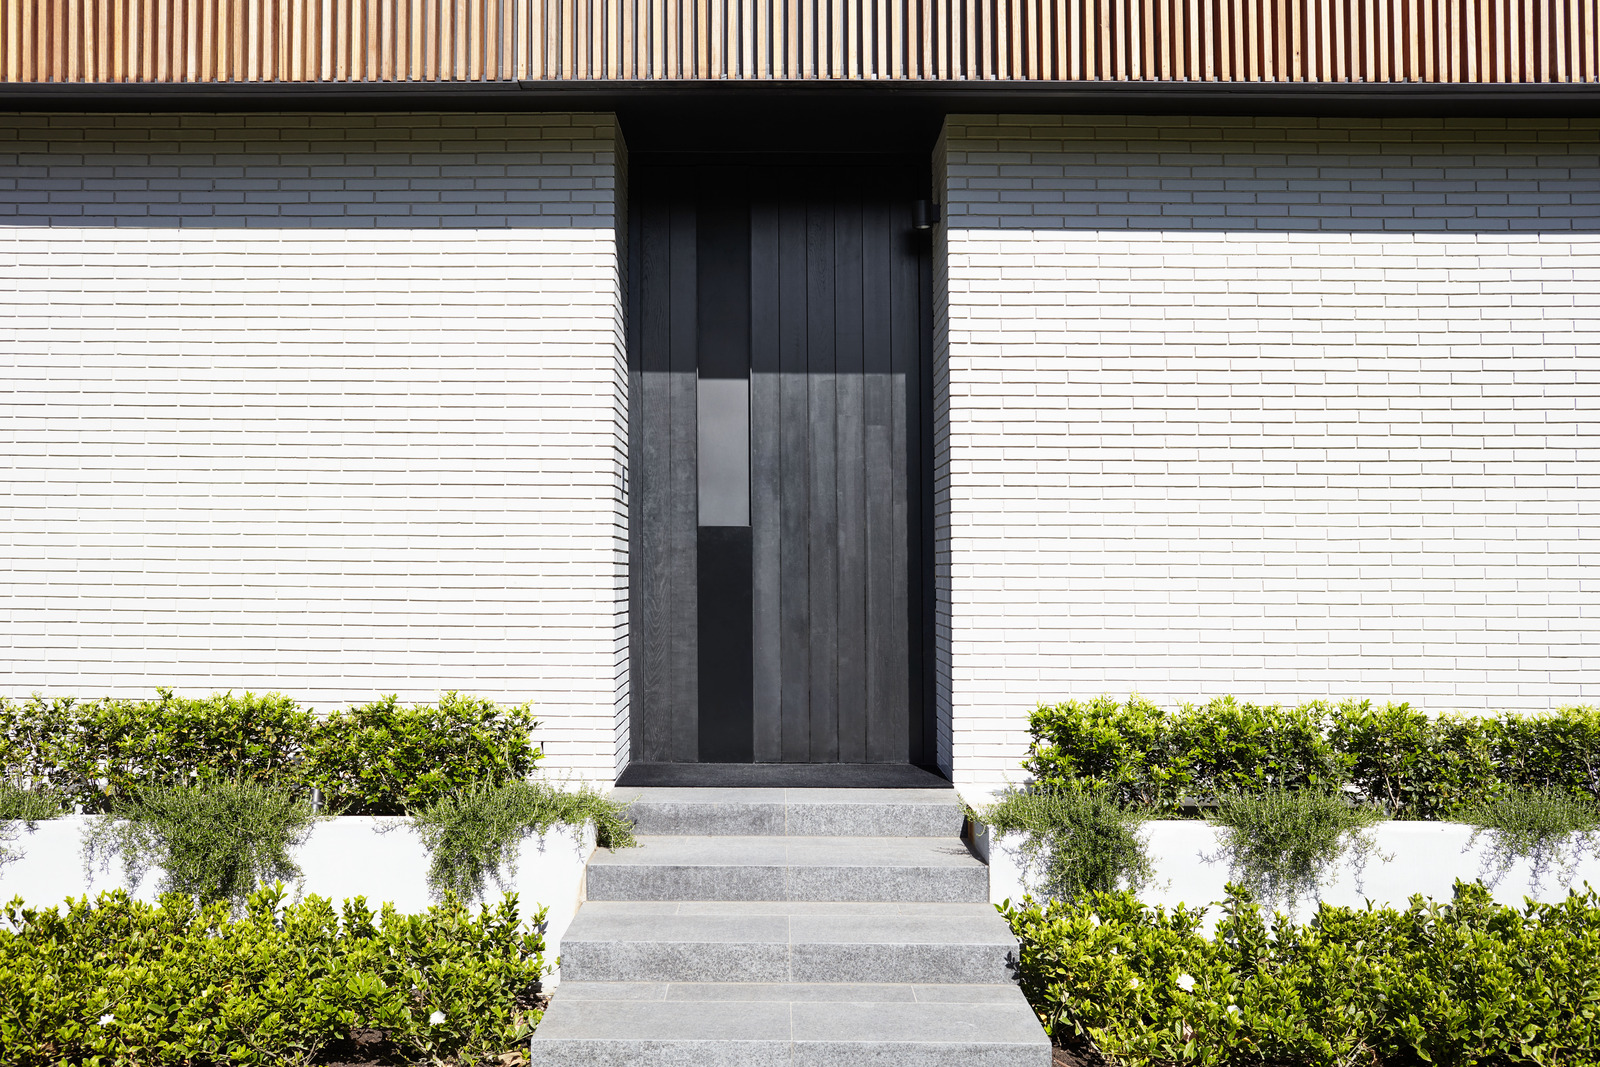 Designer home with a landscaped garden using PGH white bricks against a dark coloured door.